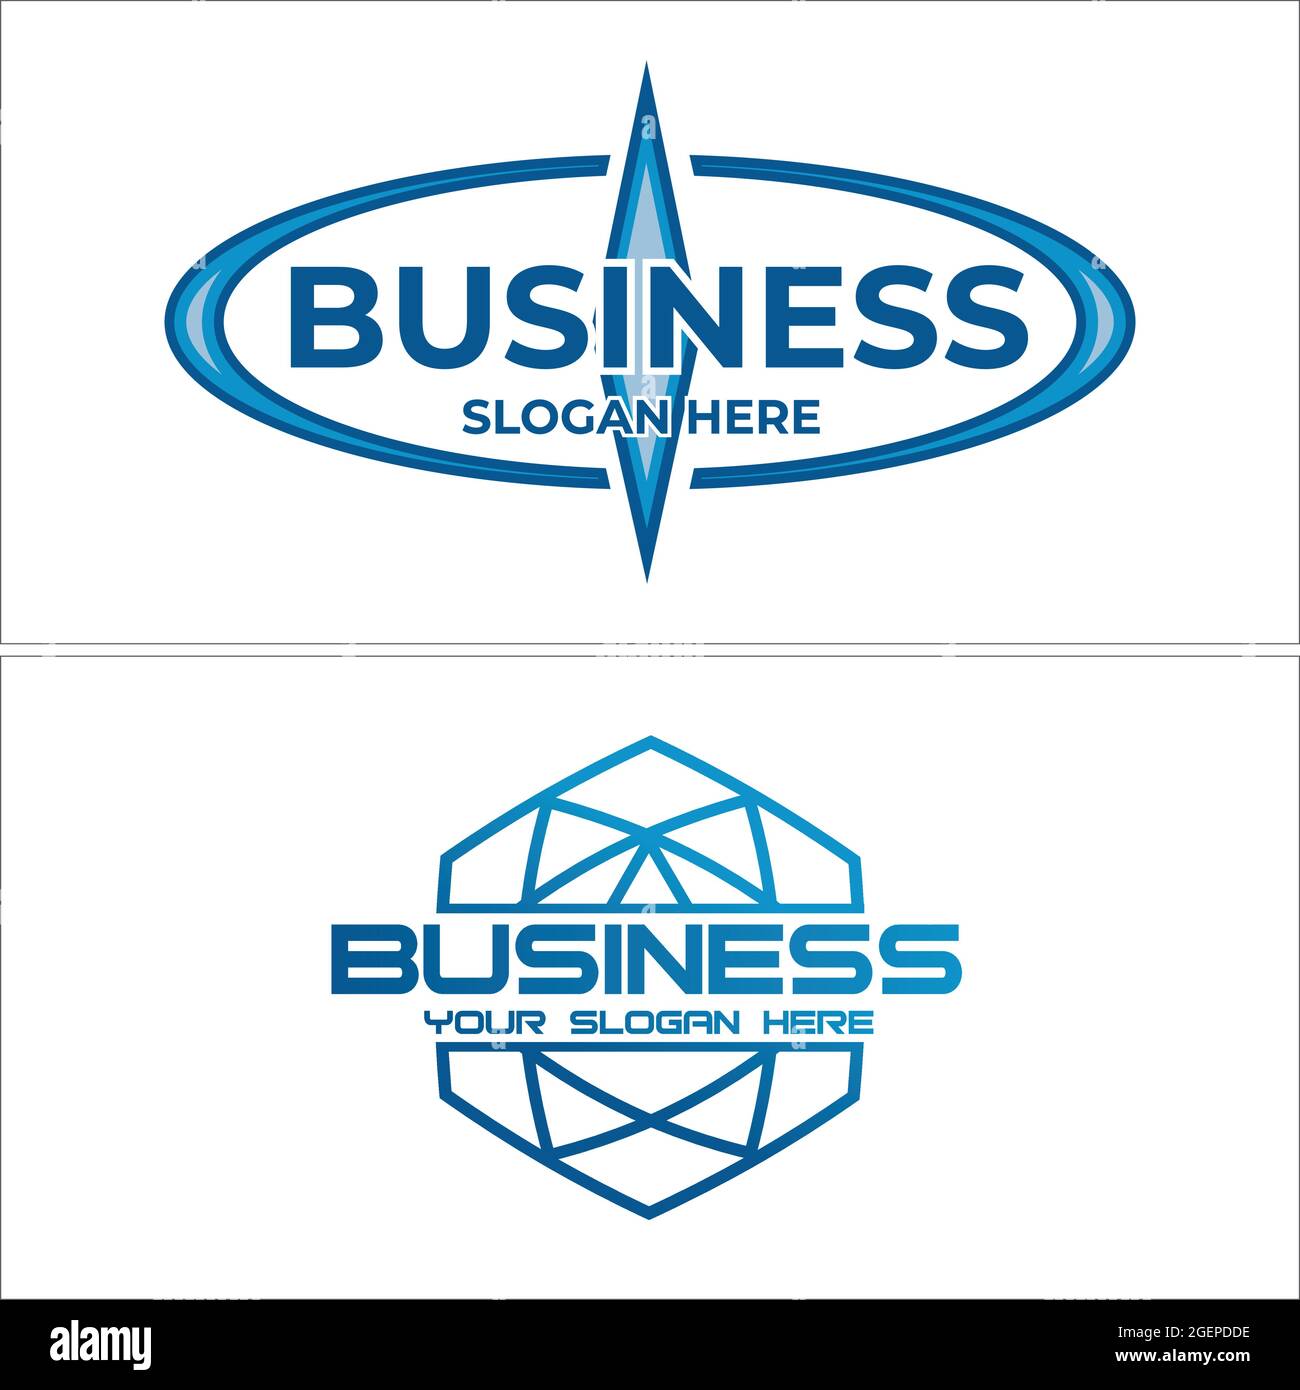 Business consulting company environmental provide corporate logo design Stock Vector